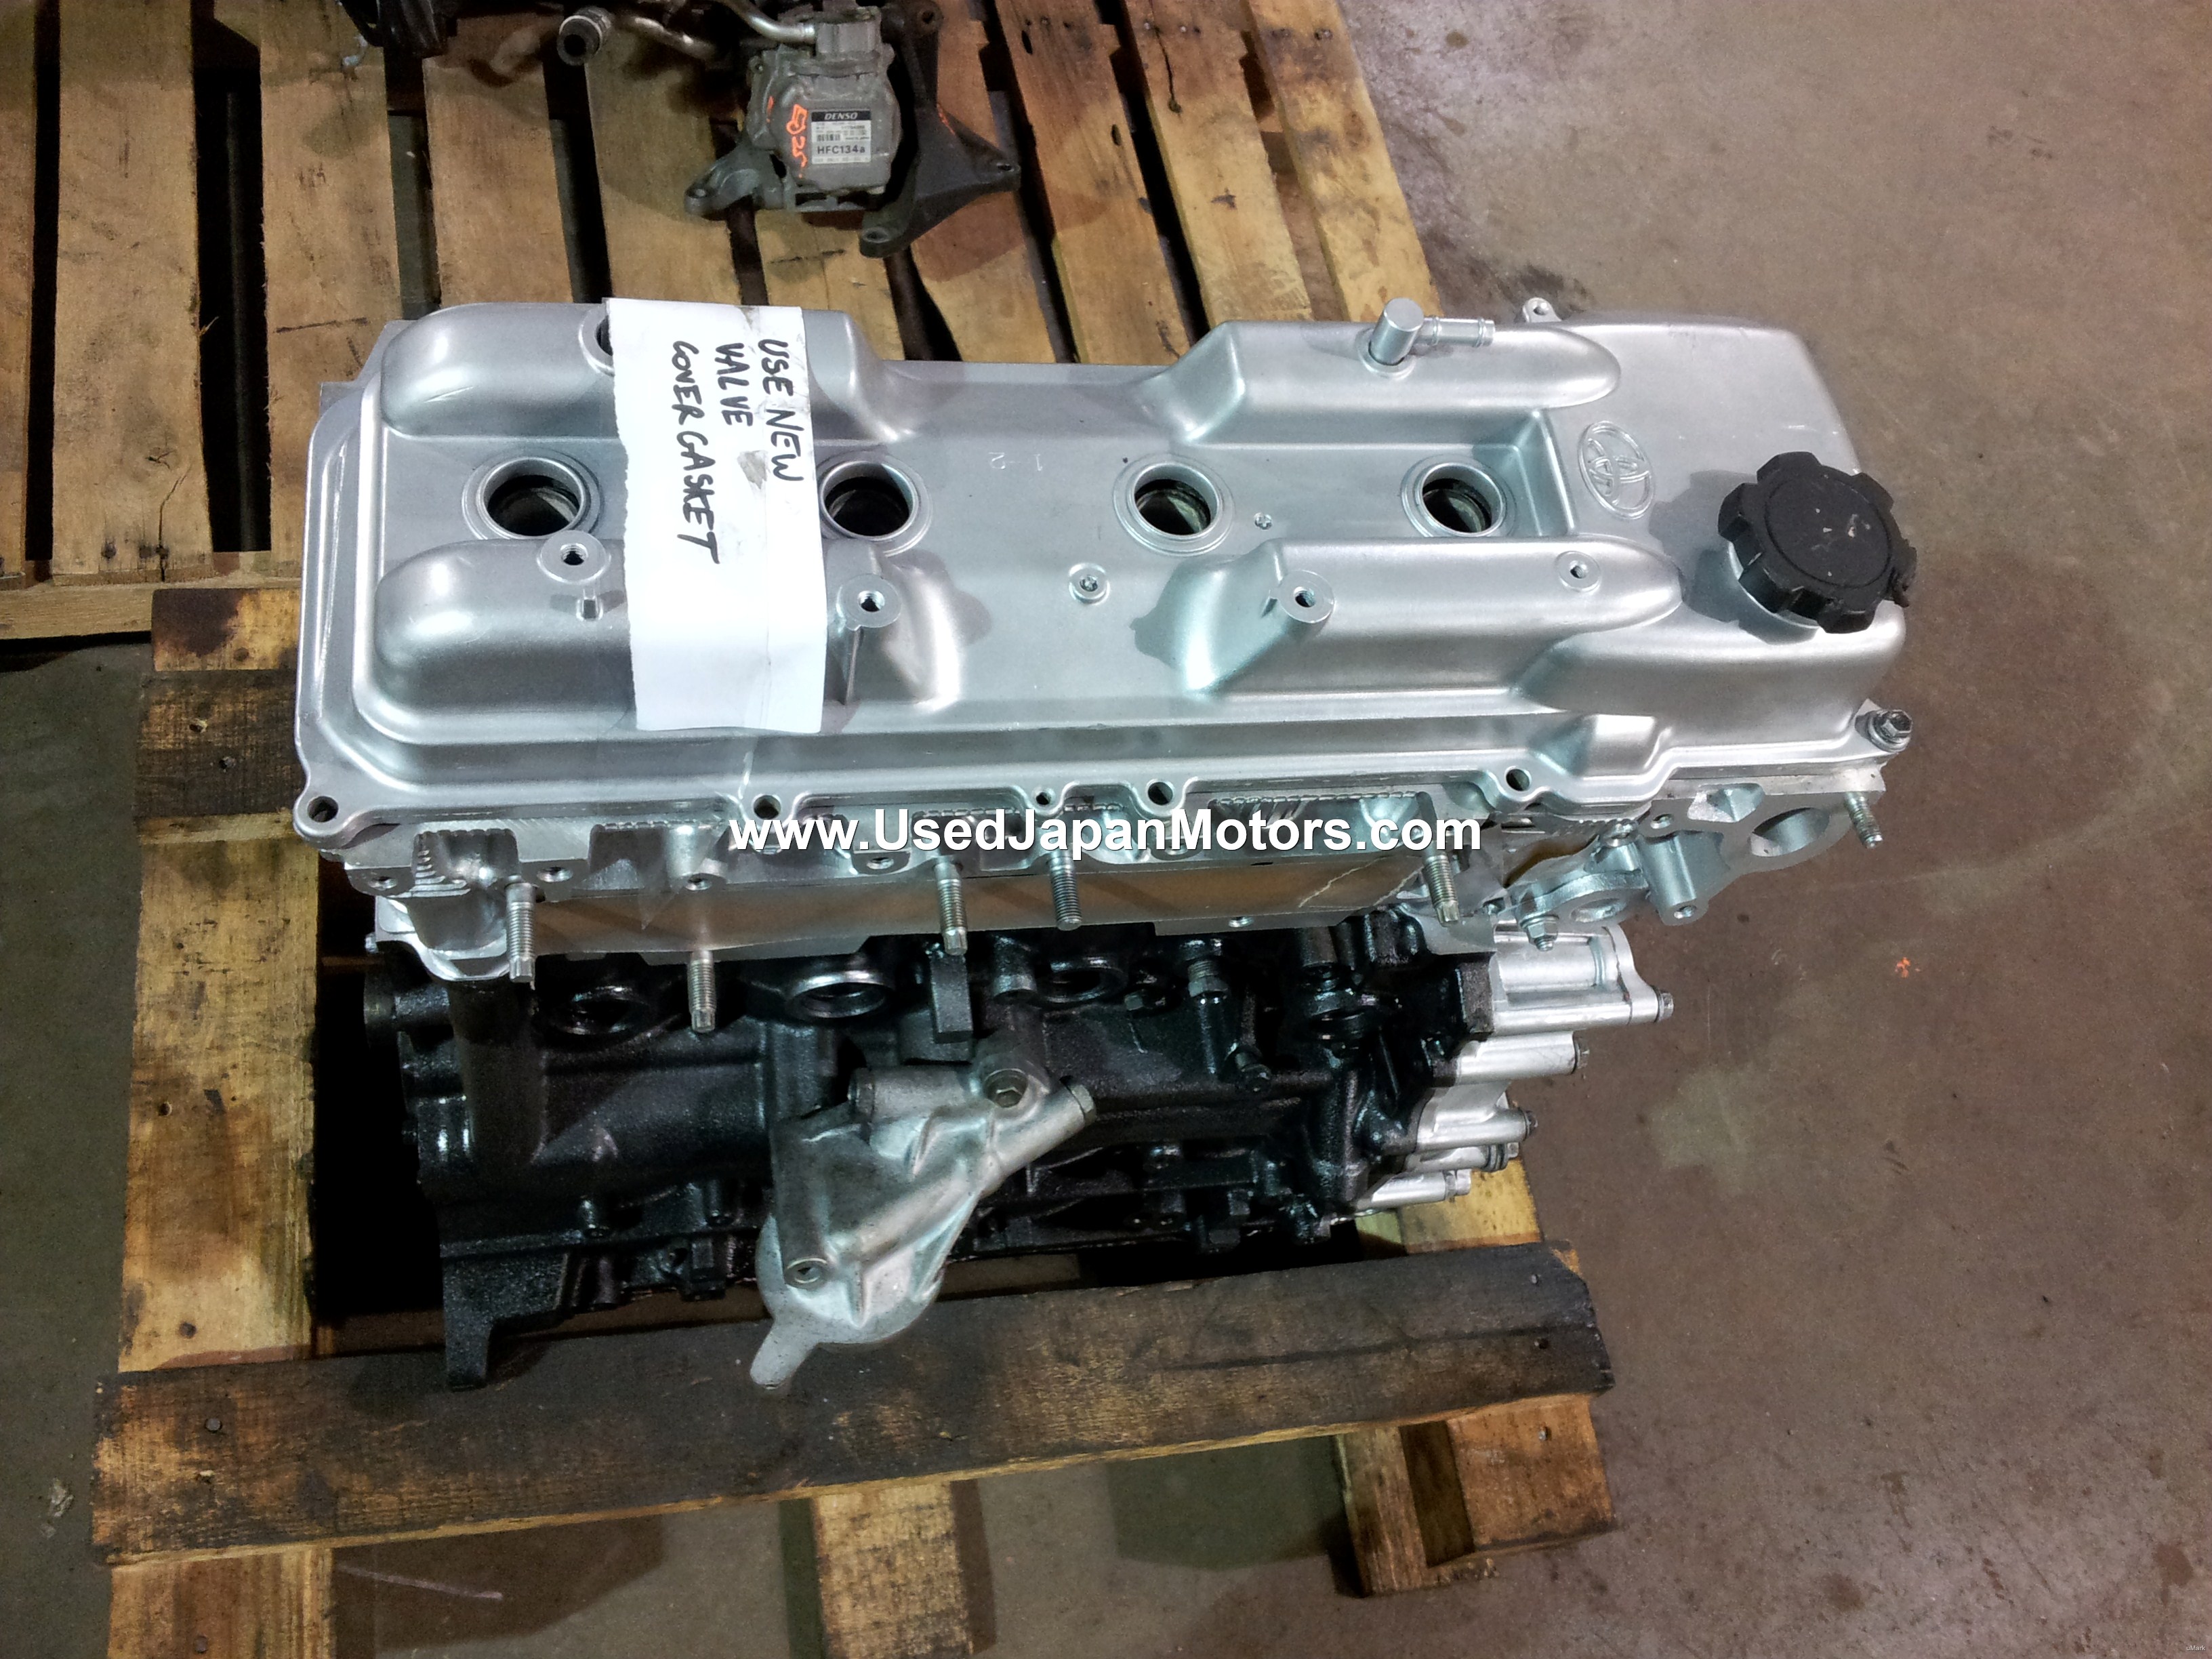 Toyota 4Runner, Toyota T100 & Toyota Tacoma 3RZ engine